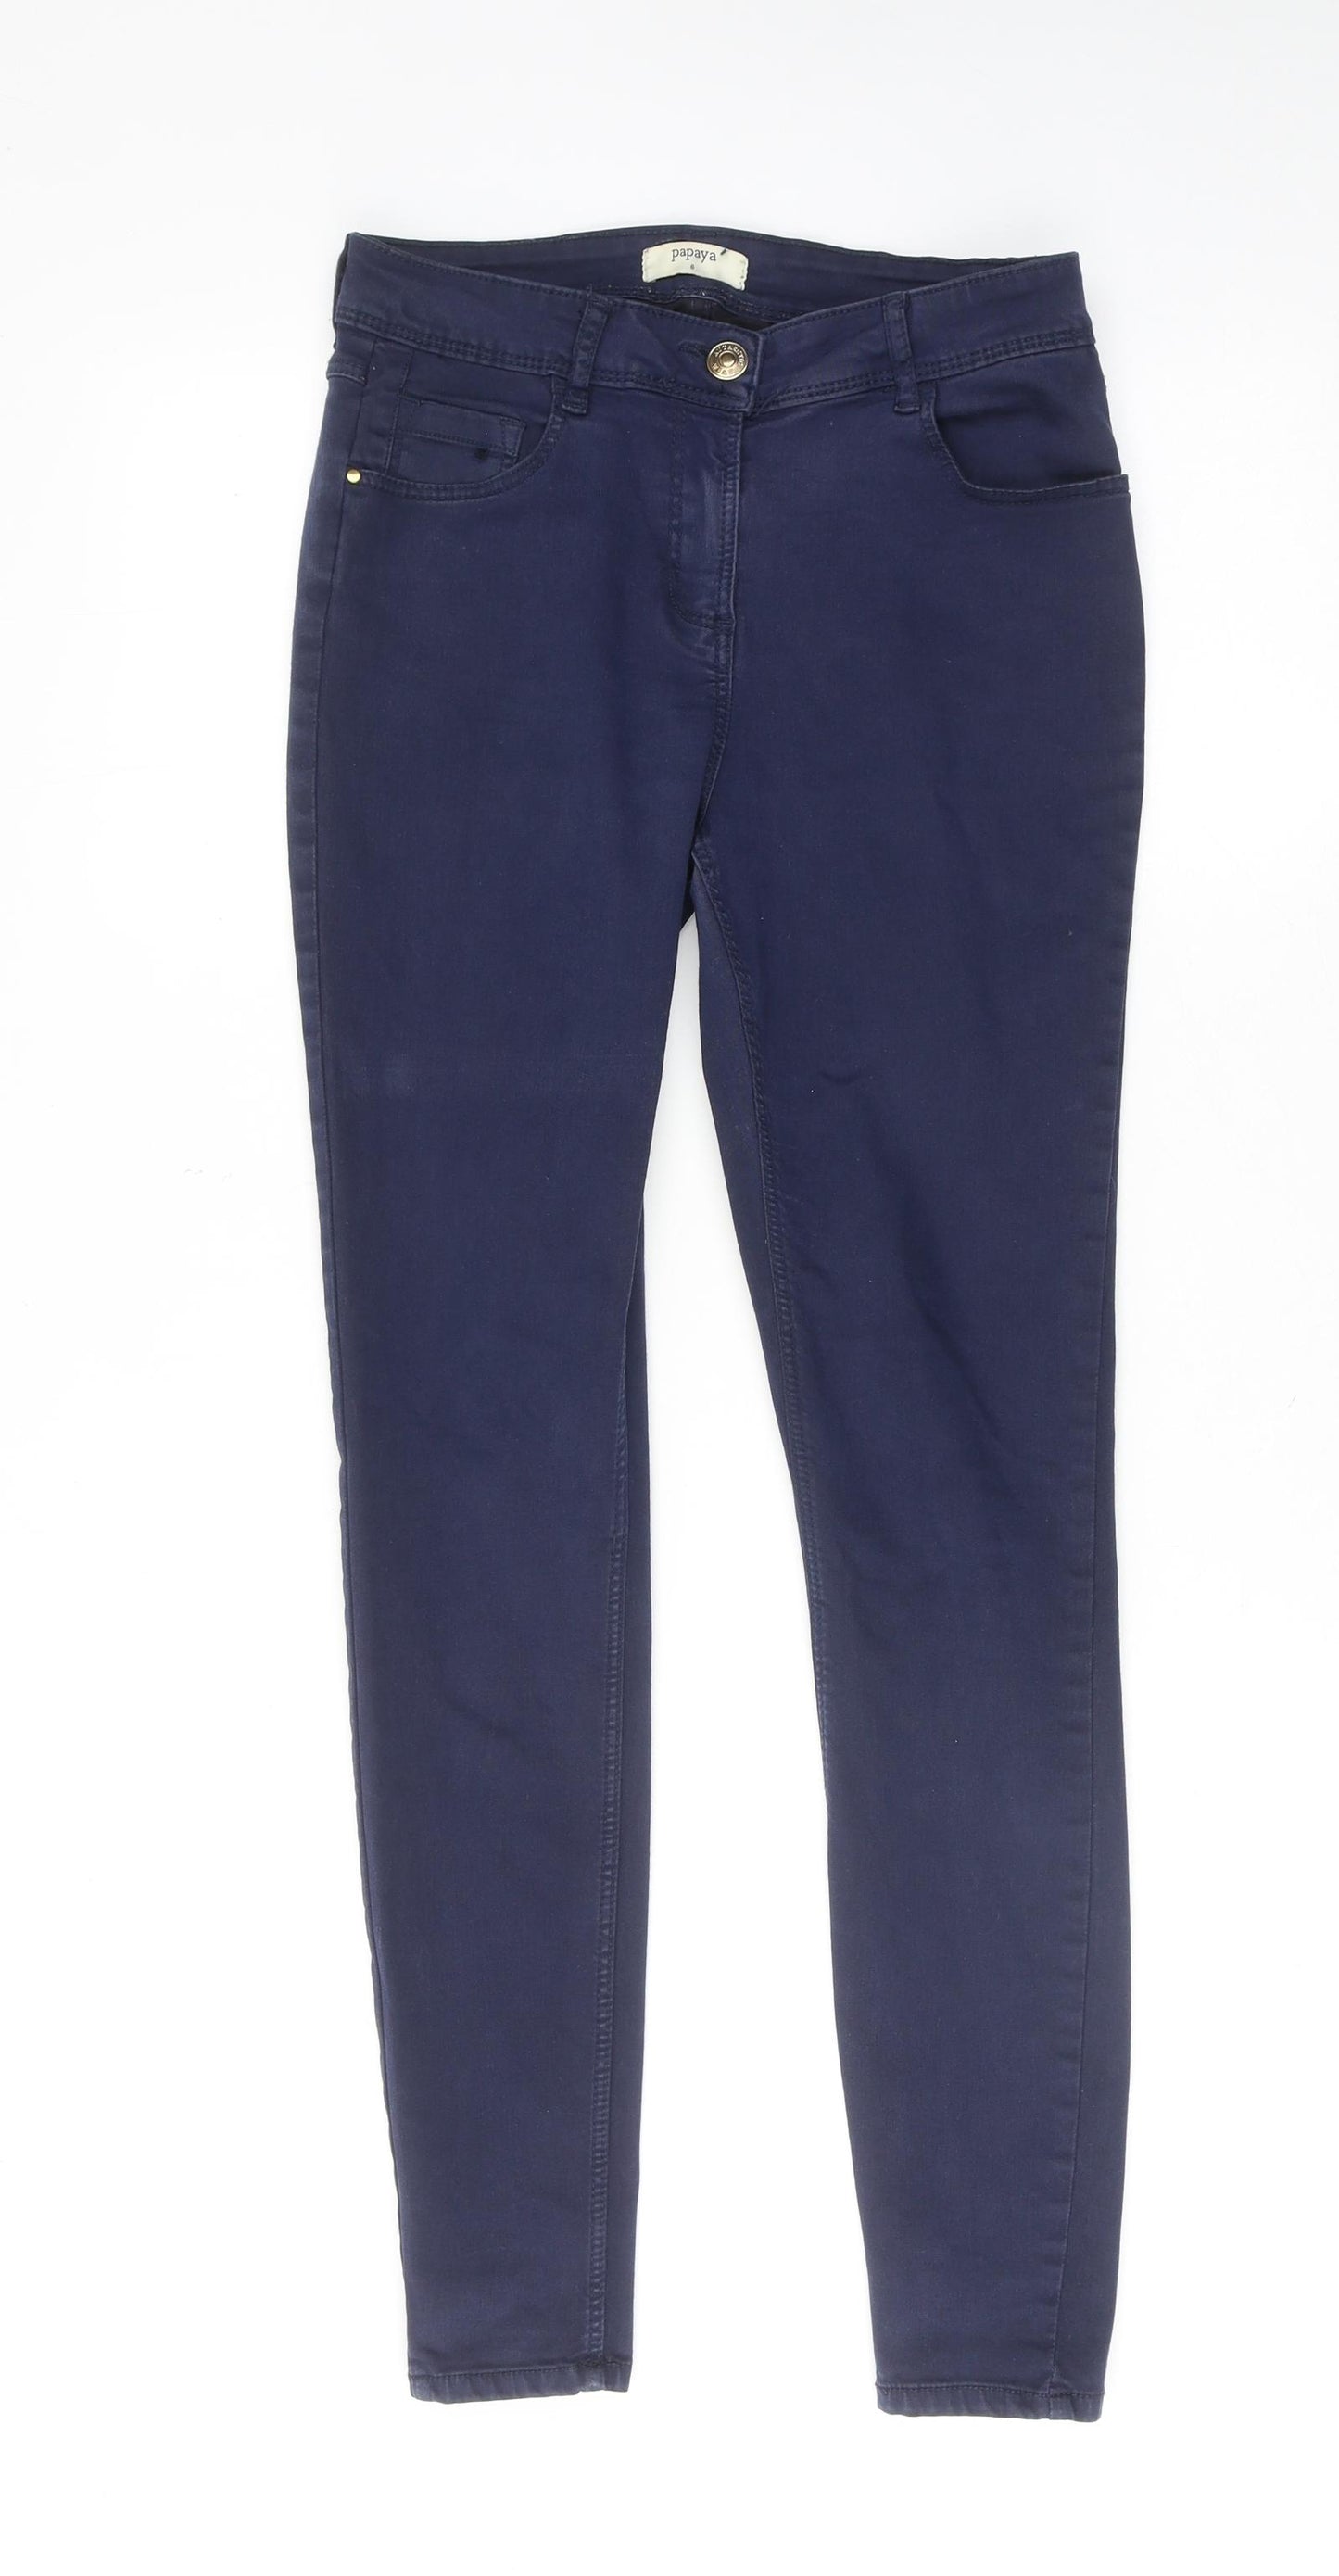 Papaya Womens Blue Cotton Skinny Jeans Size 8 Regular Zip